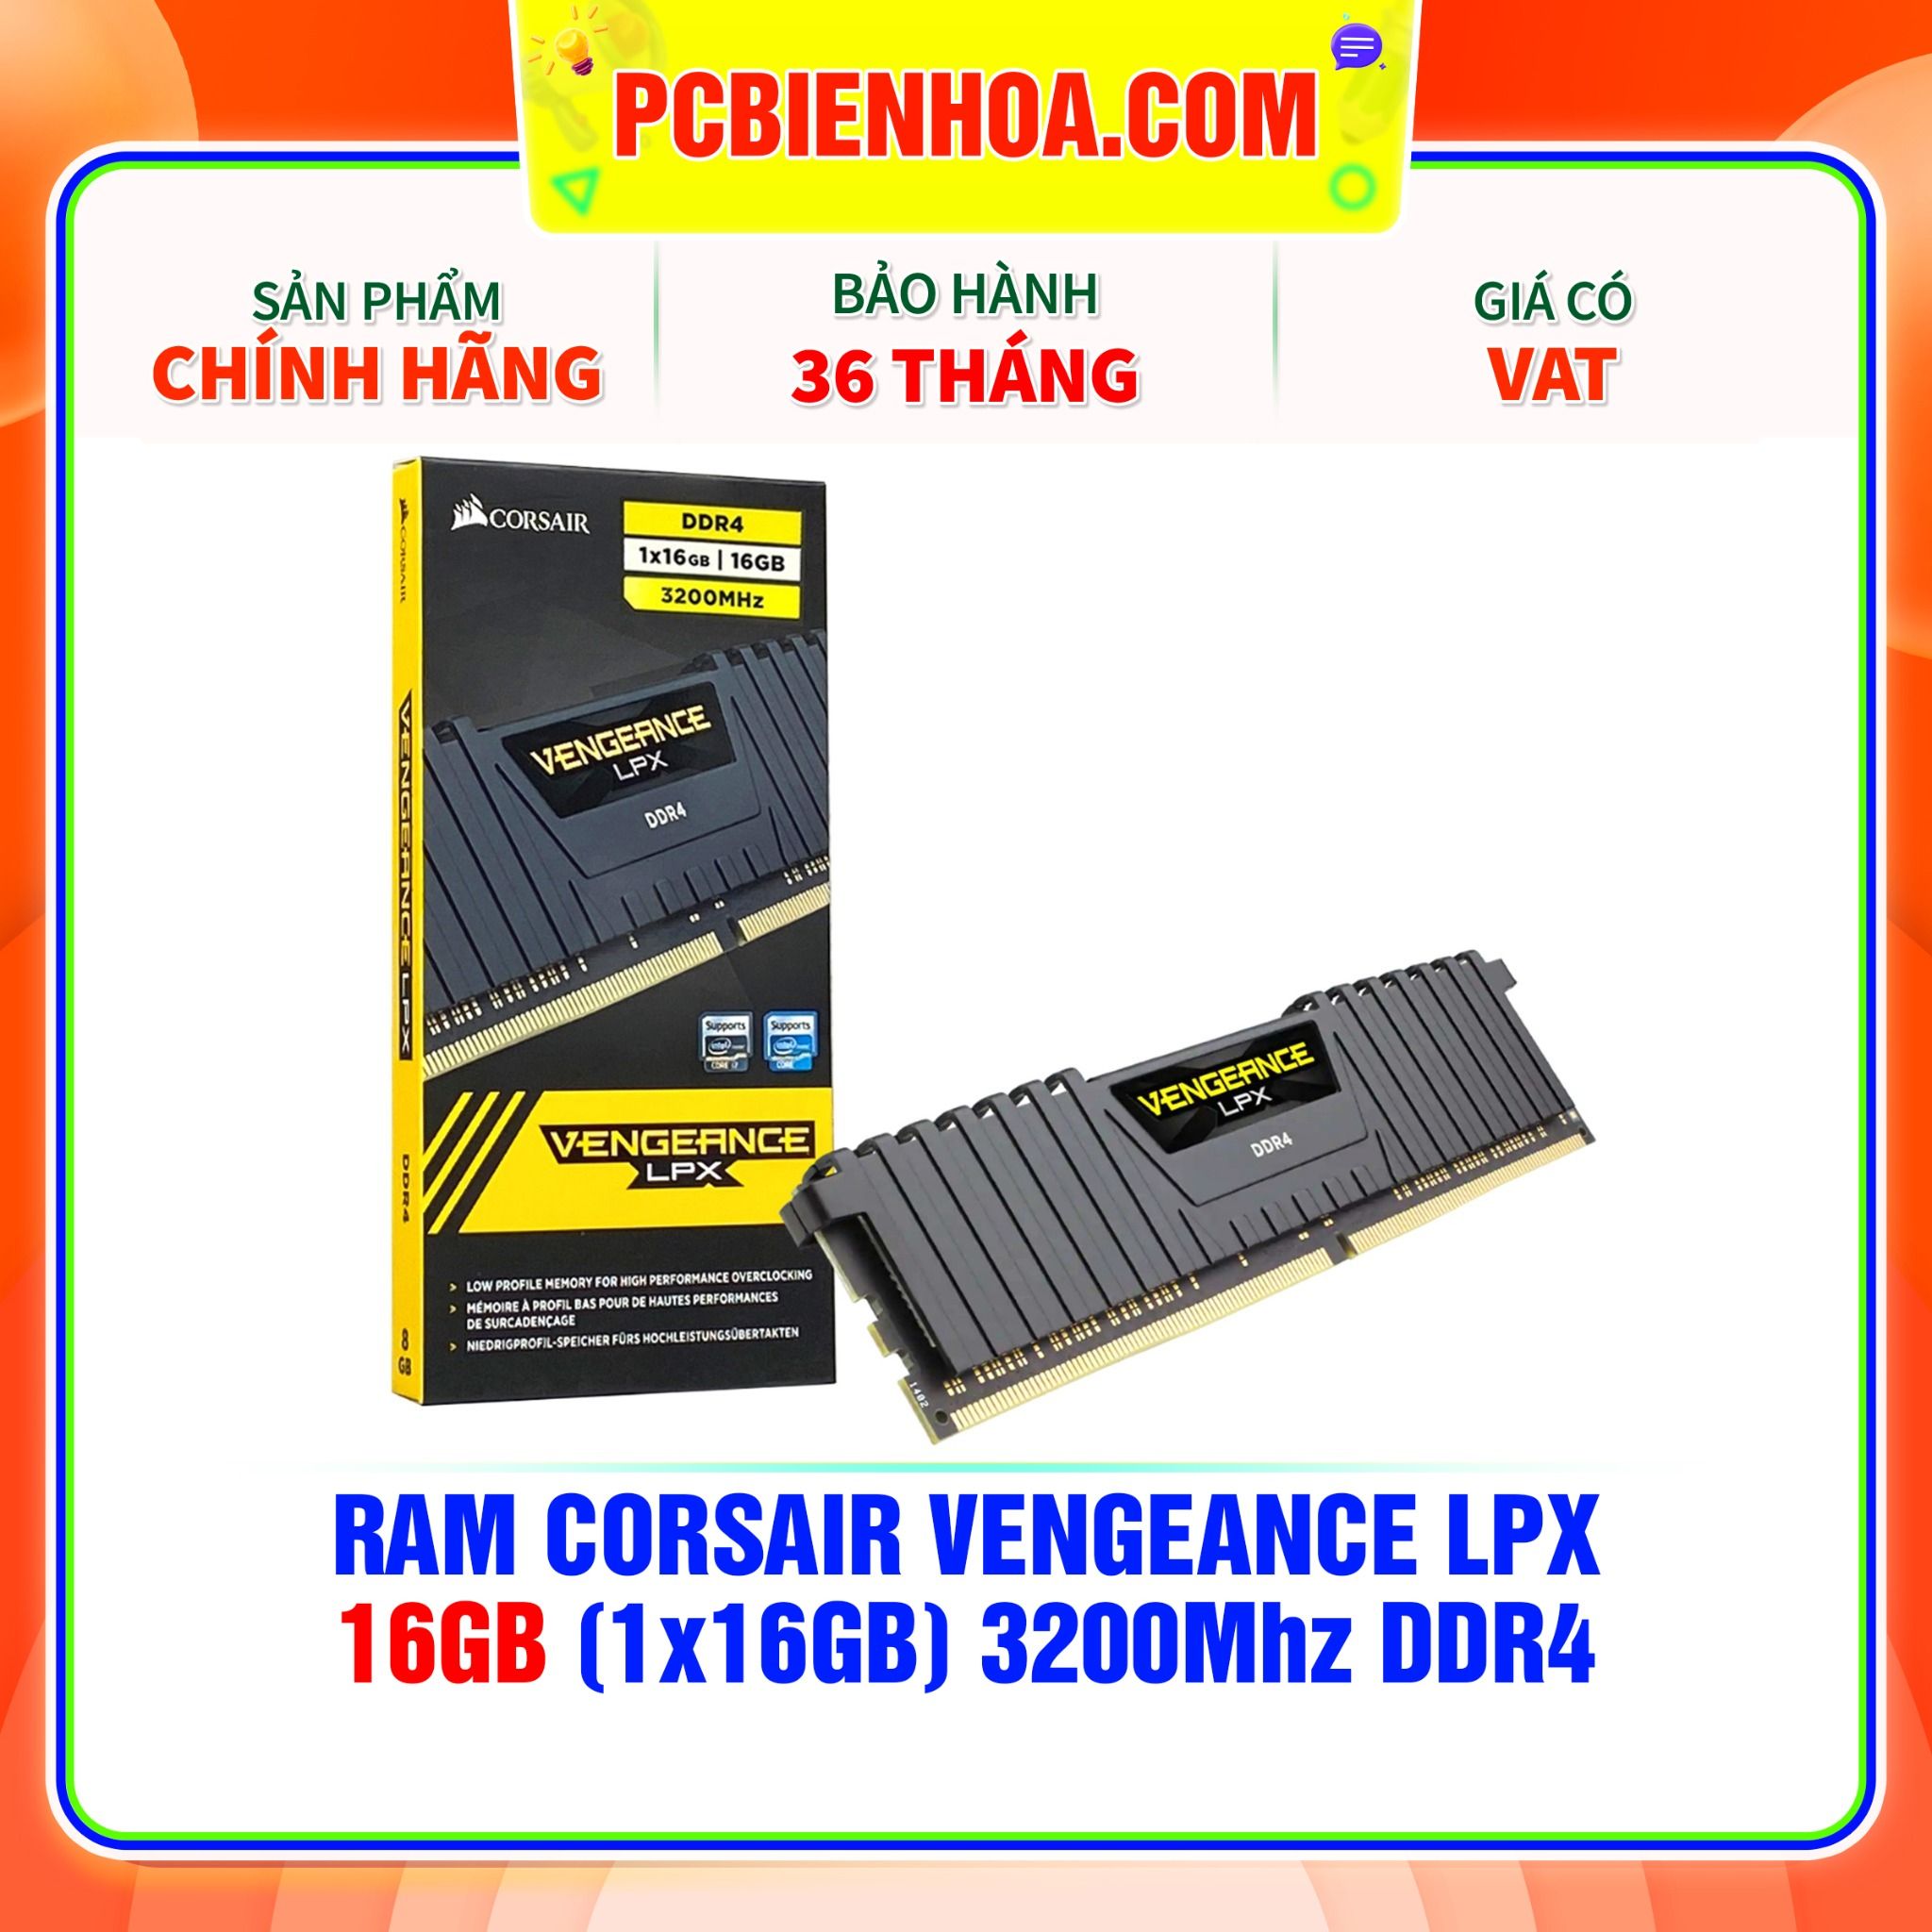  RAM CORSAIR VENGEANCE LPX 16GB (1x16GB) 3200Mhz DDR4 